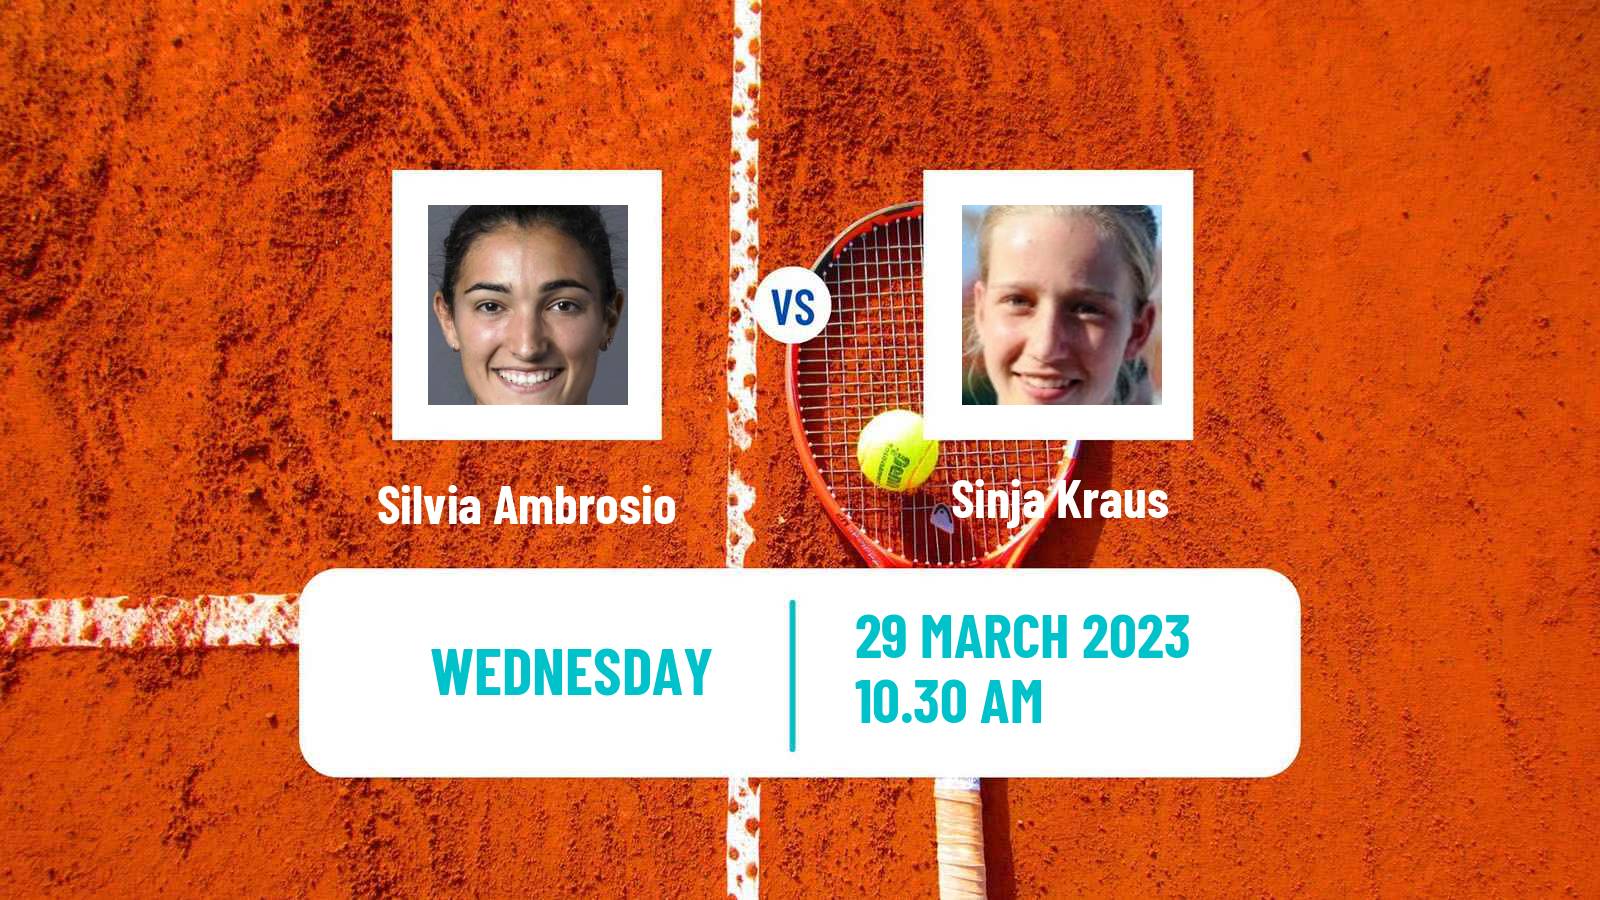 Tennis ITF Tournaments Silvia Ambrosio - Sinja Kraus